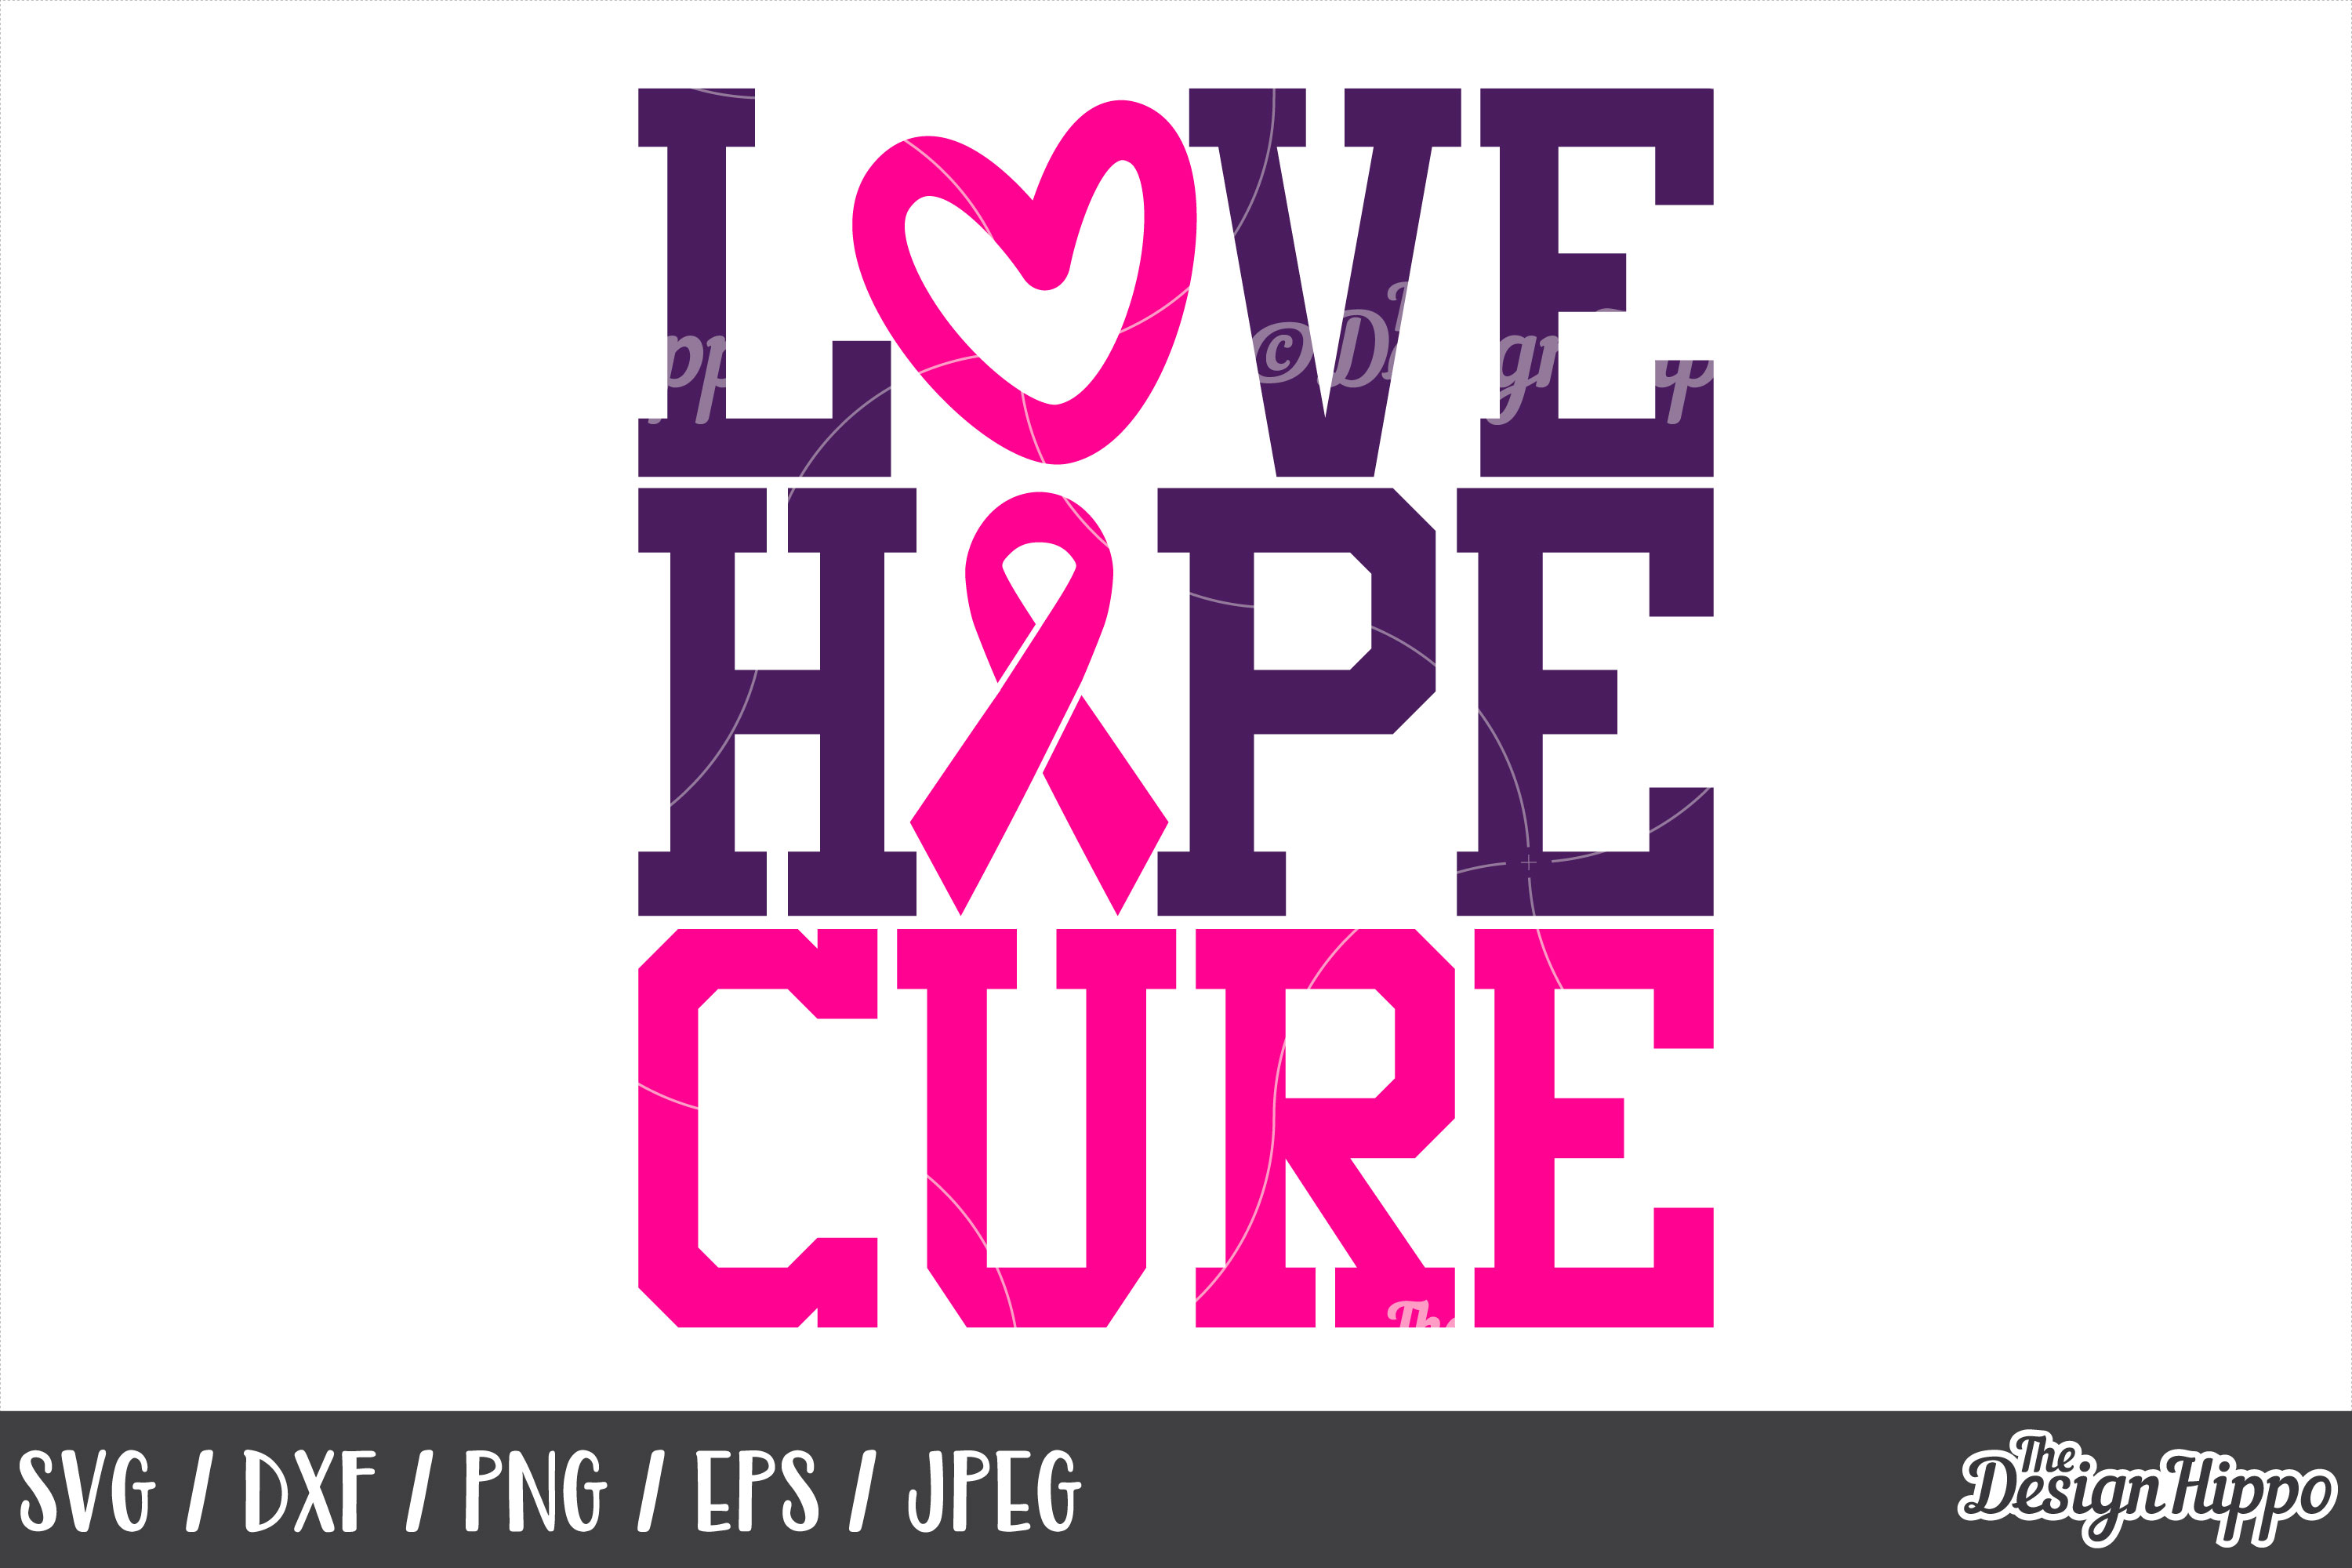 Download Free SVG Cut File - Fight Breast Cancer awareness svg, Football sv...